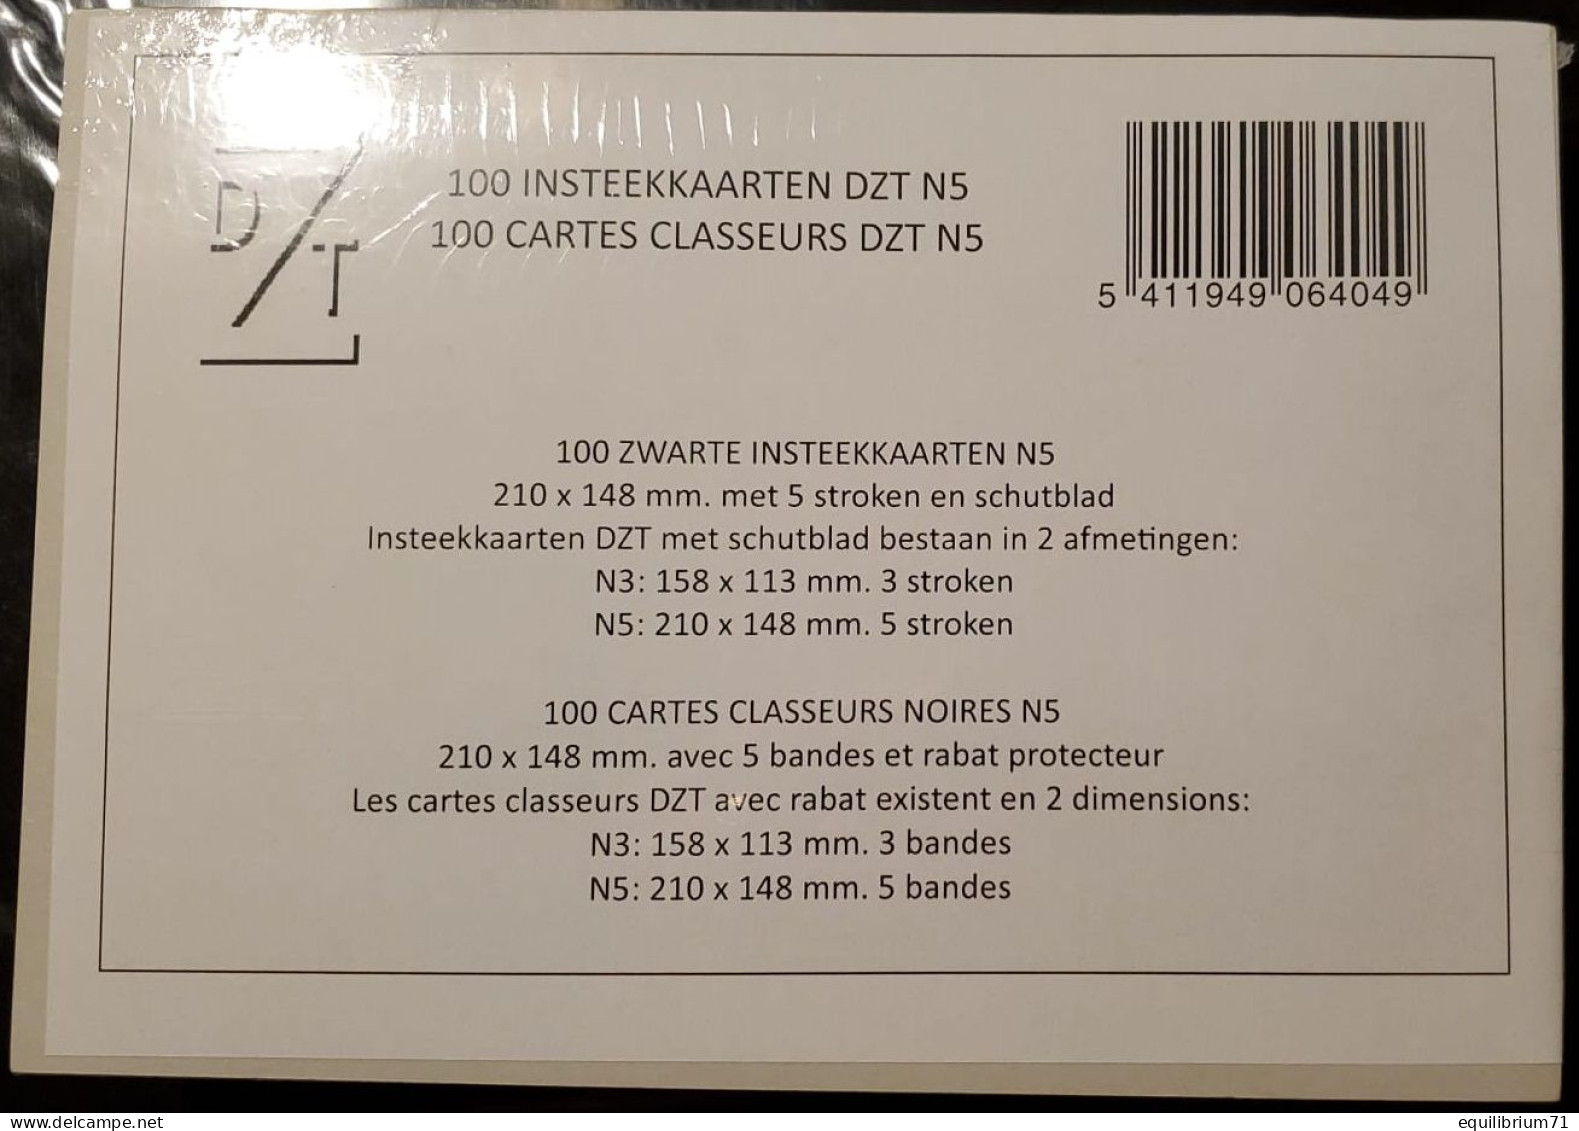 100 Cartes Classeurs / Insteekkaarten / Karten Einlegen / Insert Cards - DZT N5 - Etichette